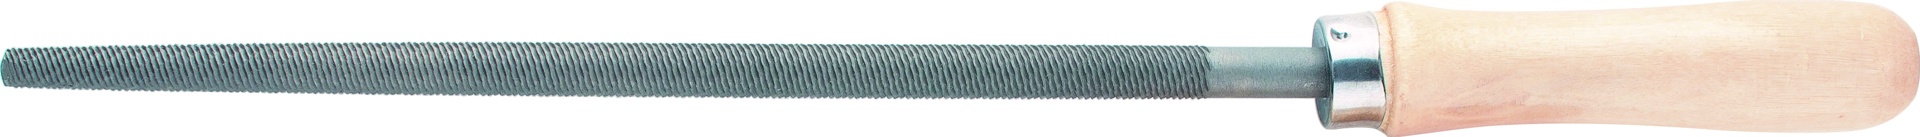 Turpija okrugla 150mm, sa drvenom drškom Sibrtex 16123 (SIB 16123)